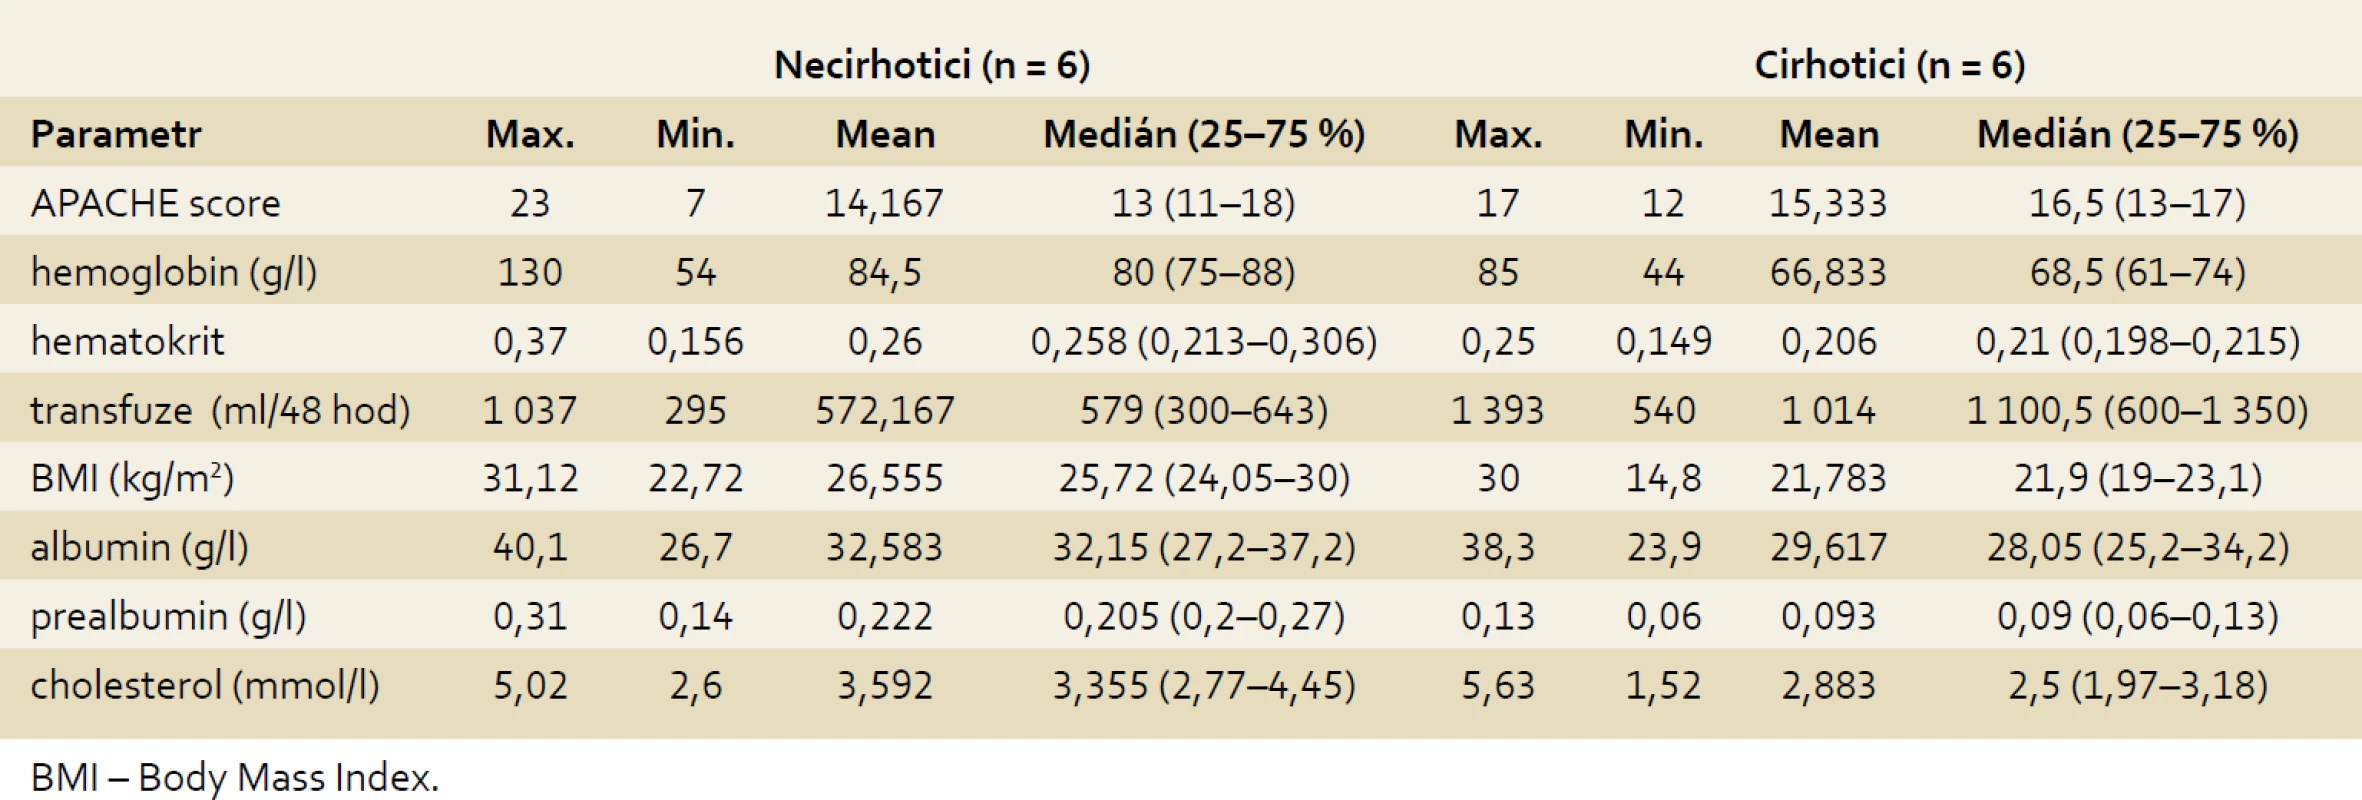 Srovnání základních metabolických parametrů u pacientů s cirhózou (n = 6) a bez cirhózy (n = 6) na začátku studie.
Tab. 2. Comparing basic metabolic parameters in patients with cirrhosis (n = 6) and without cirrhosis (n = 6) at the beginning of the study.